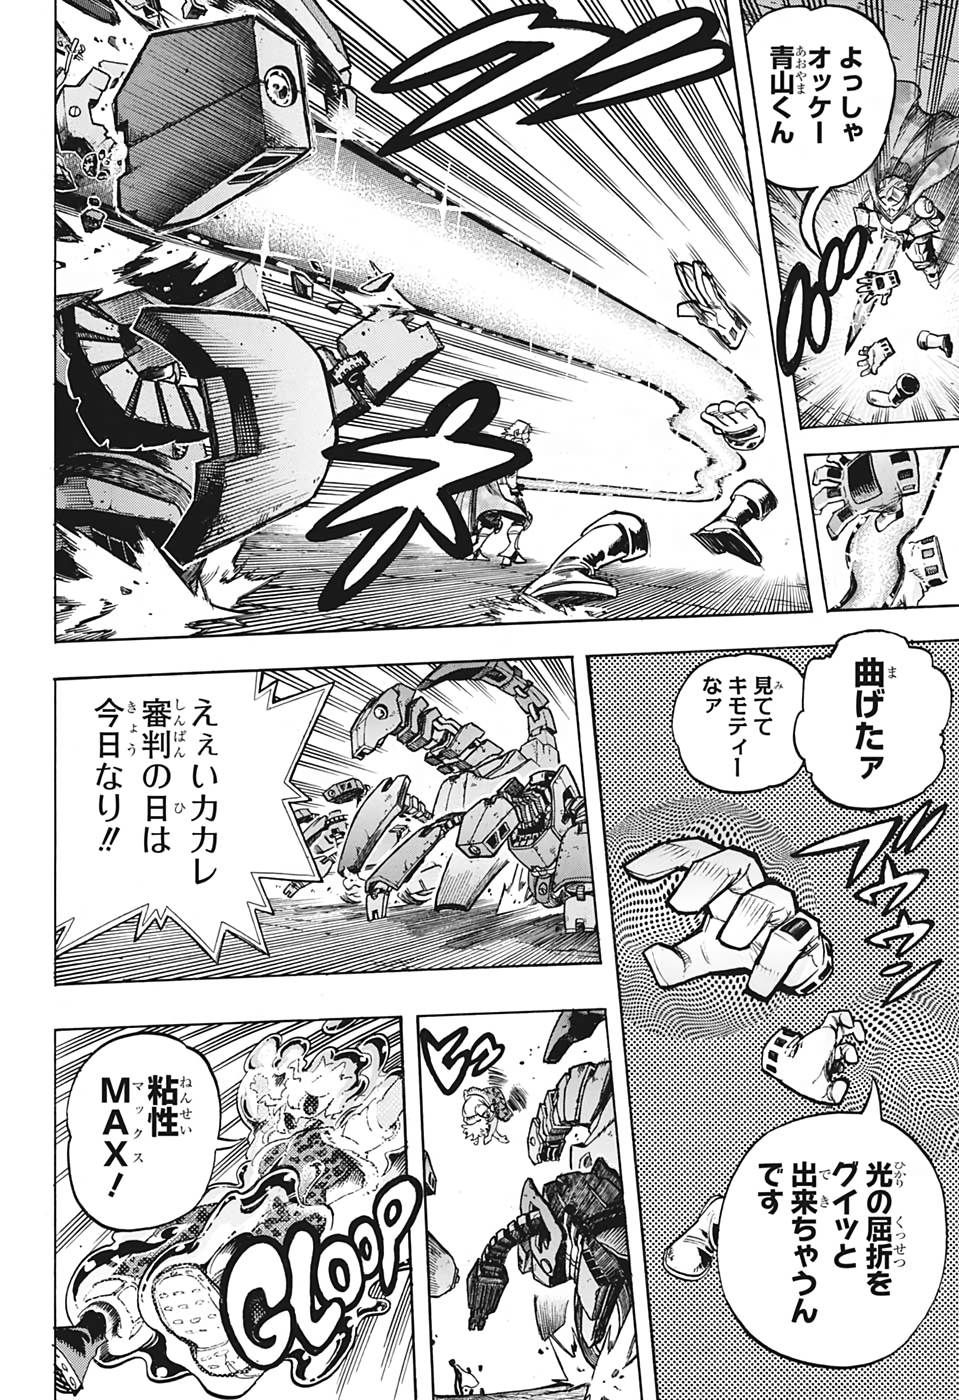 Boku no Hero Academia - Chapter 256 - Page 2